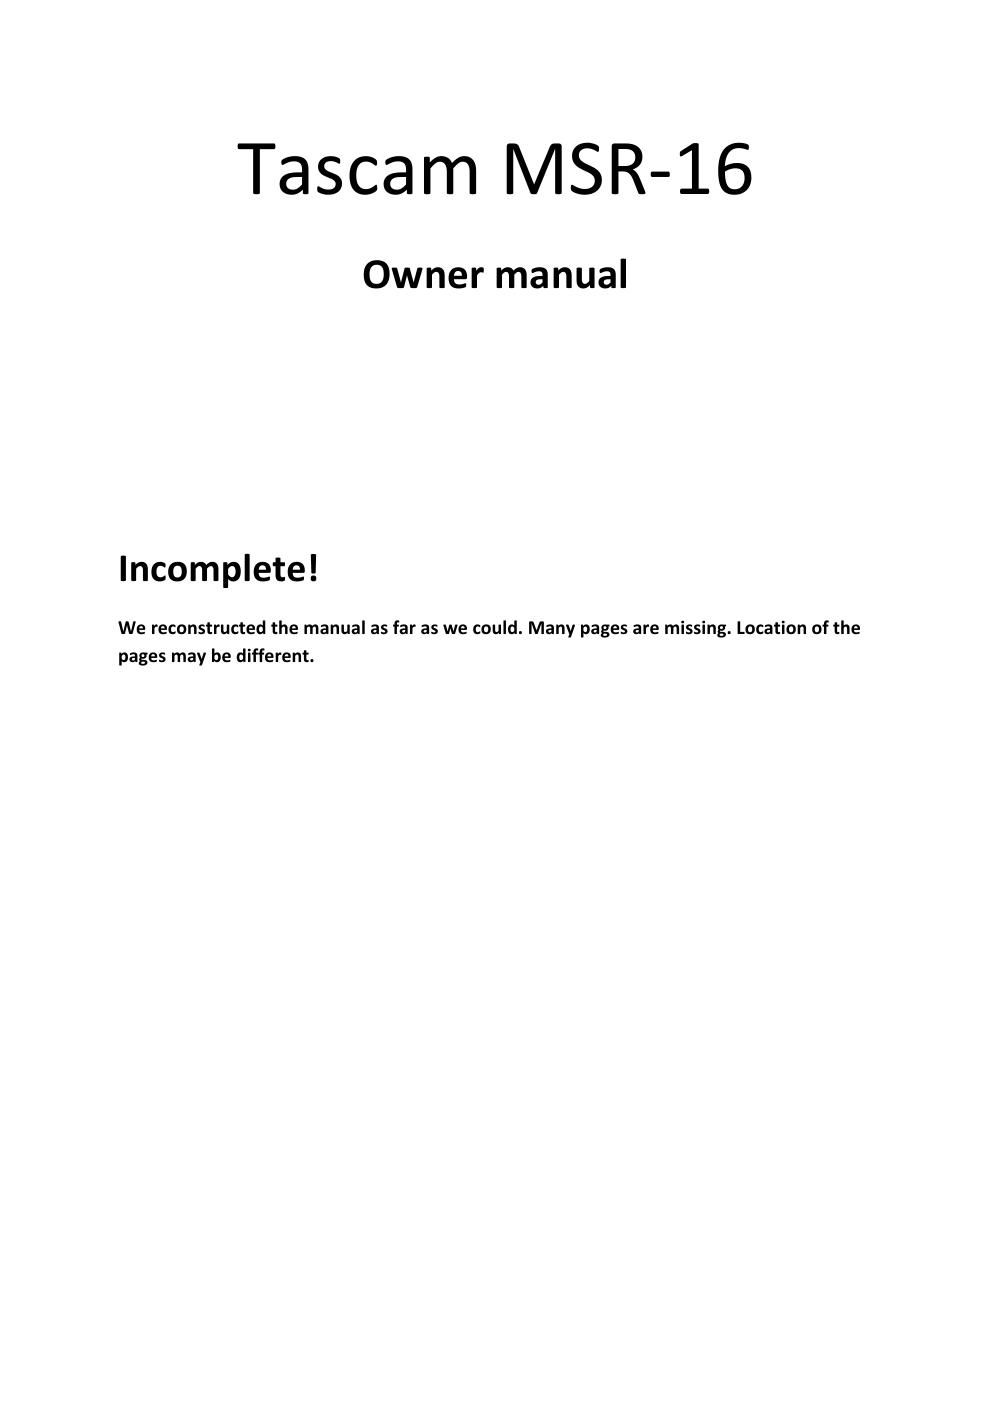 tascam msr 16 owners manual